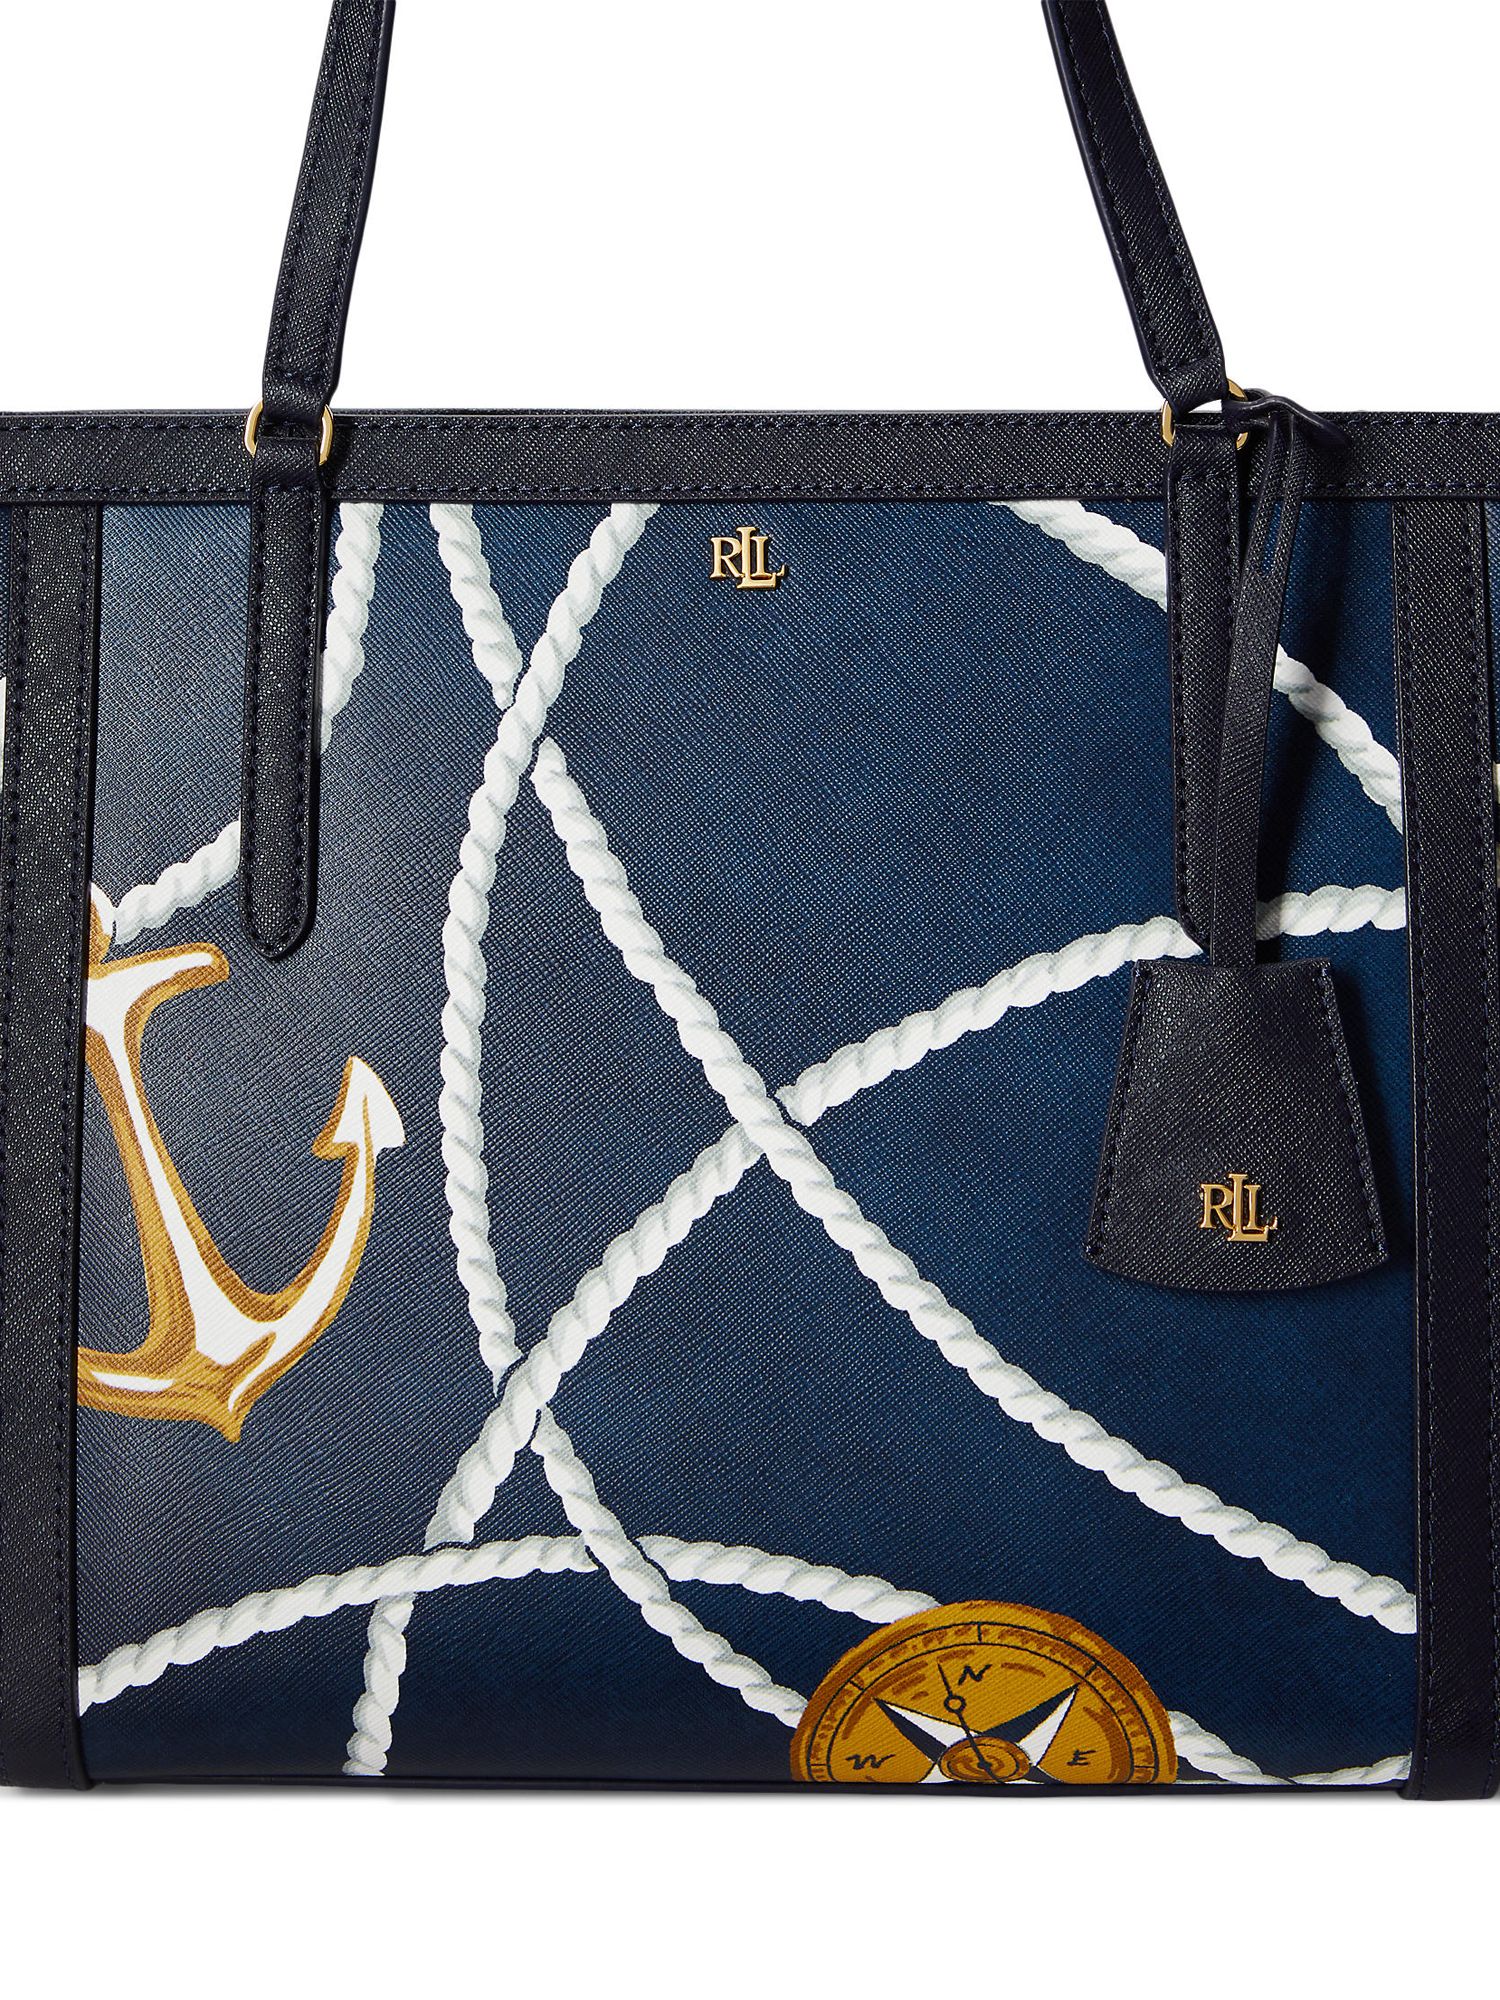 Ralph Lauren Nautical Canvas and Leather Handbag 